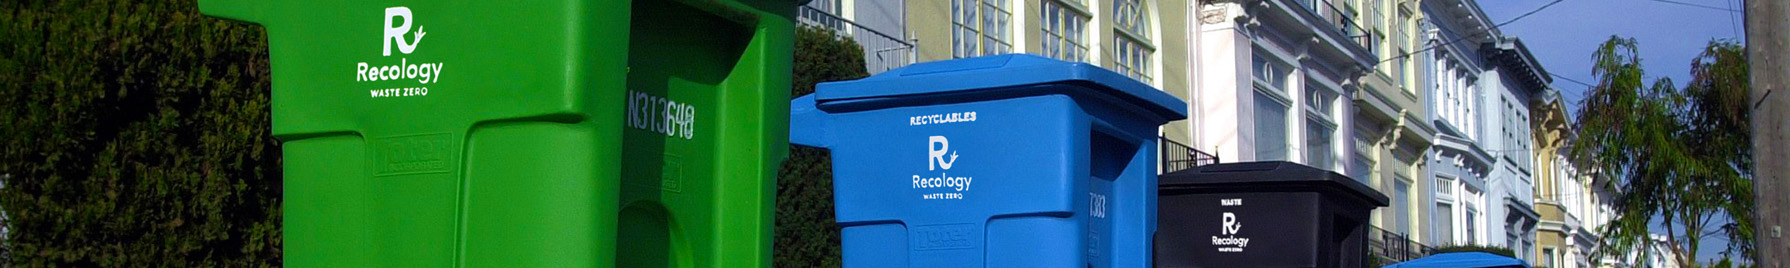 Aluminum Foil - South San Francisco Scavenger Recycling Guide